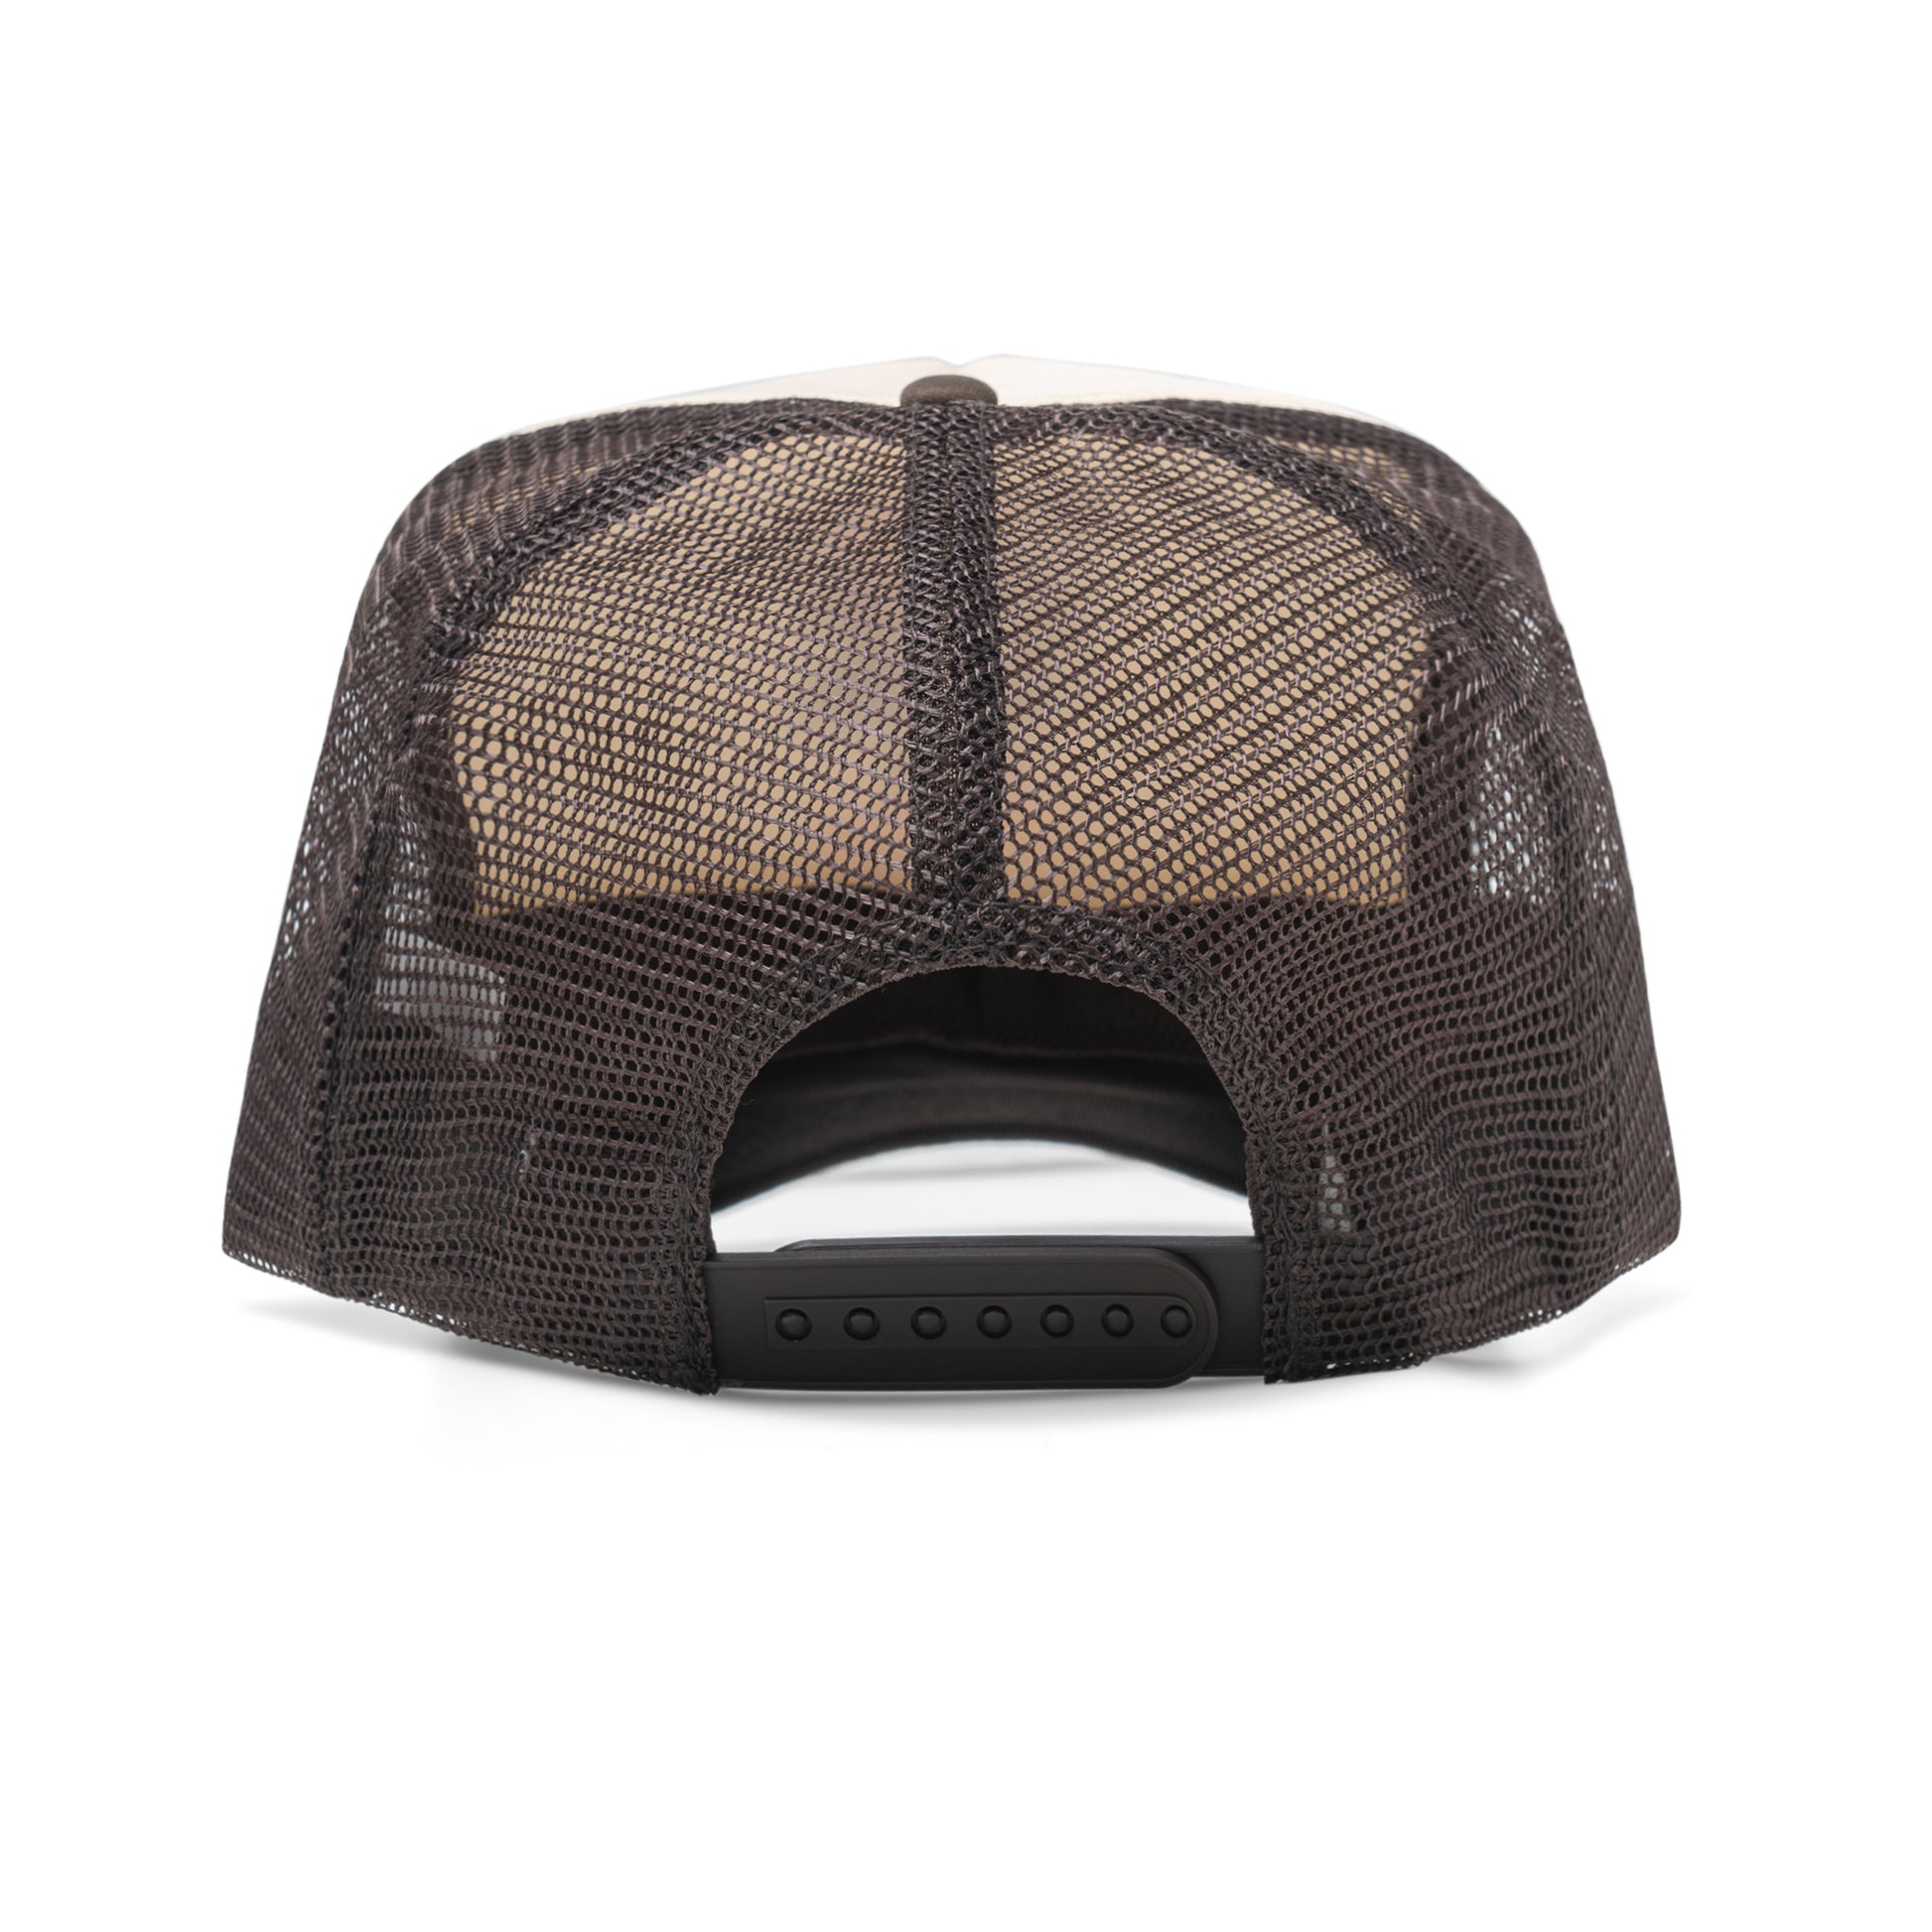  dark brown mesh back of trucker hat with adjustable closure 